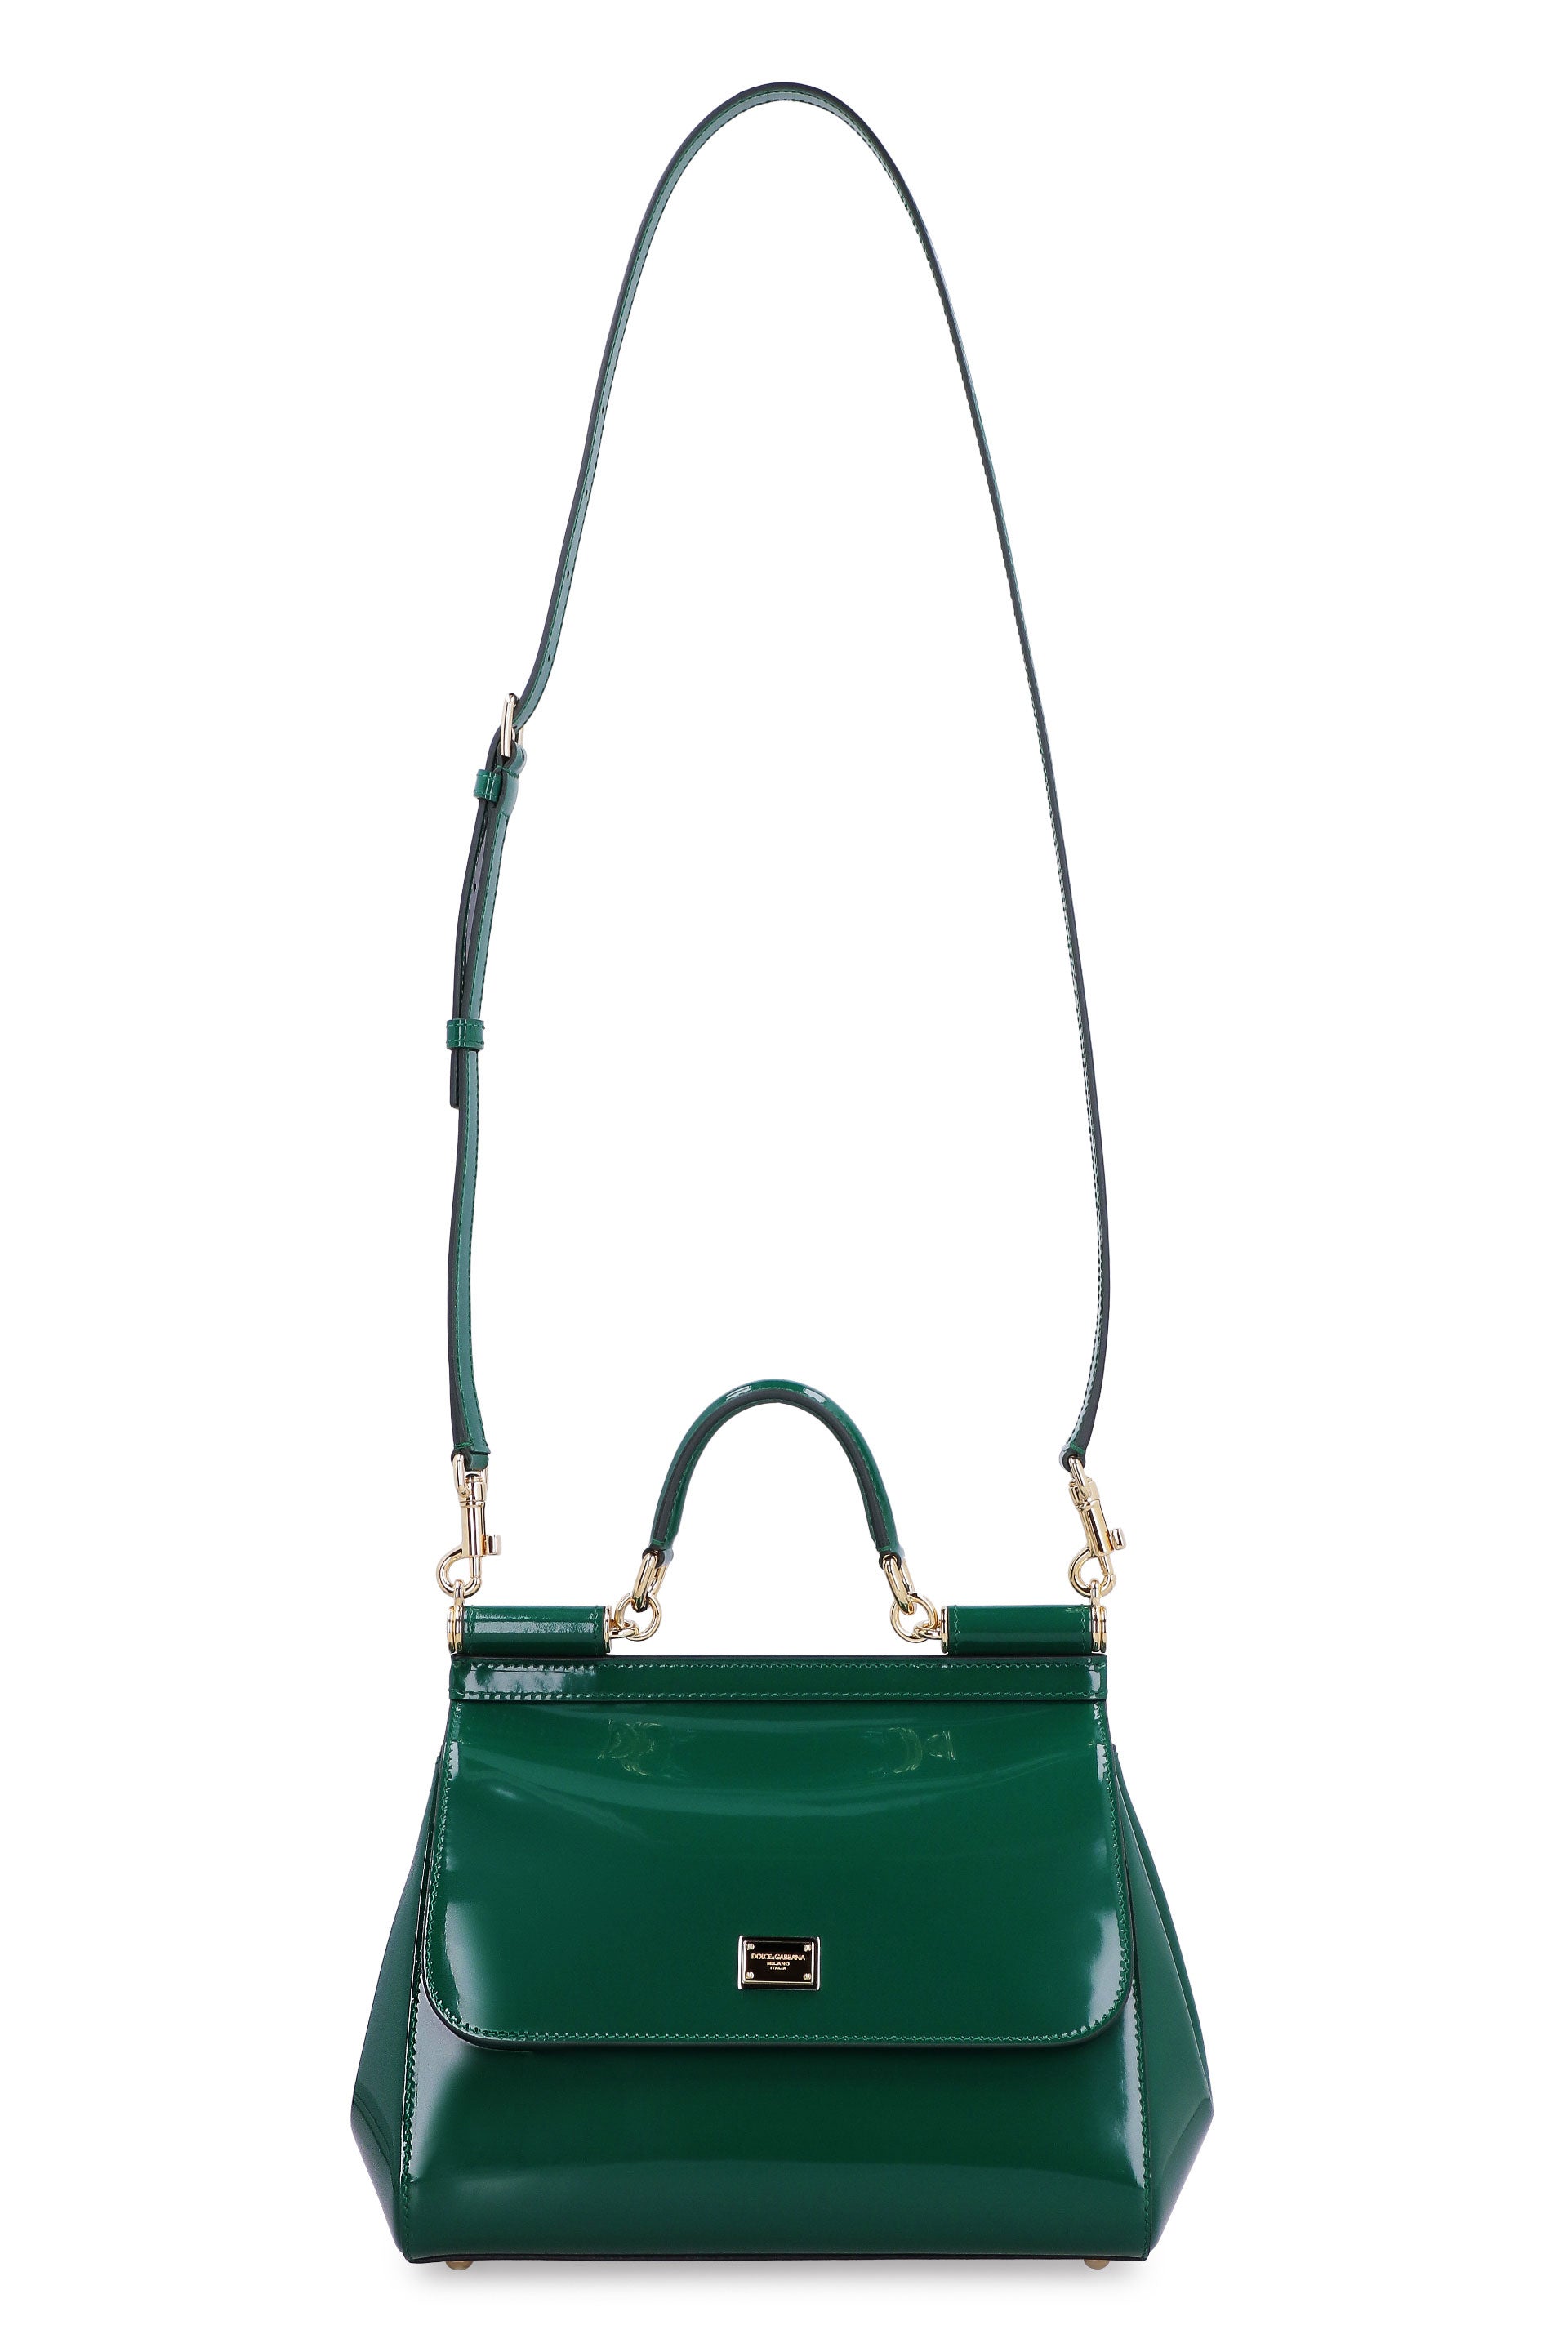 Dolce & Gabbana - Authenticated Sicily Handbag - Wicker Green Plain for Women, Never Worn